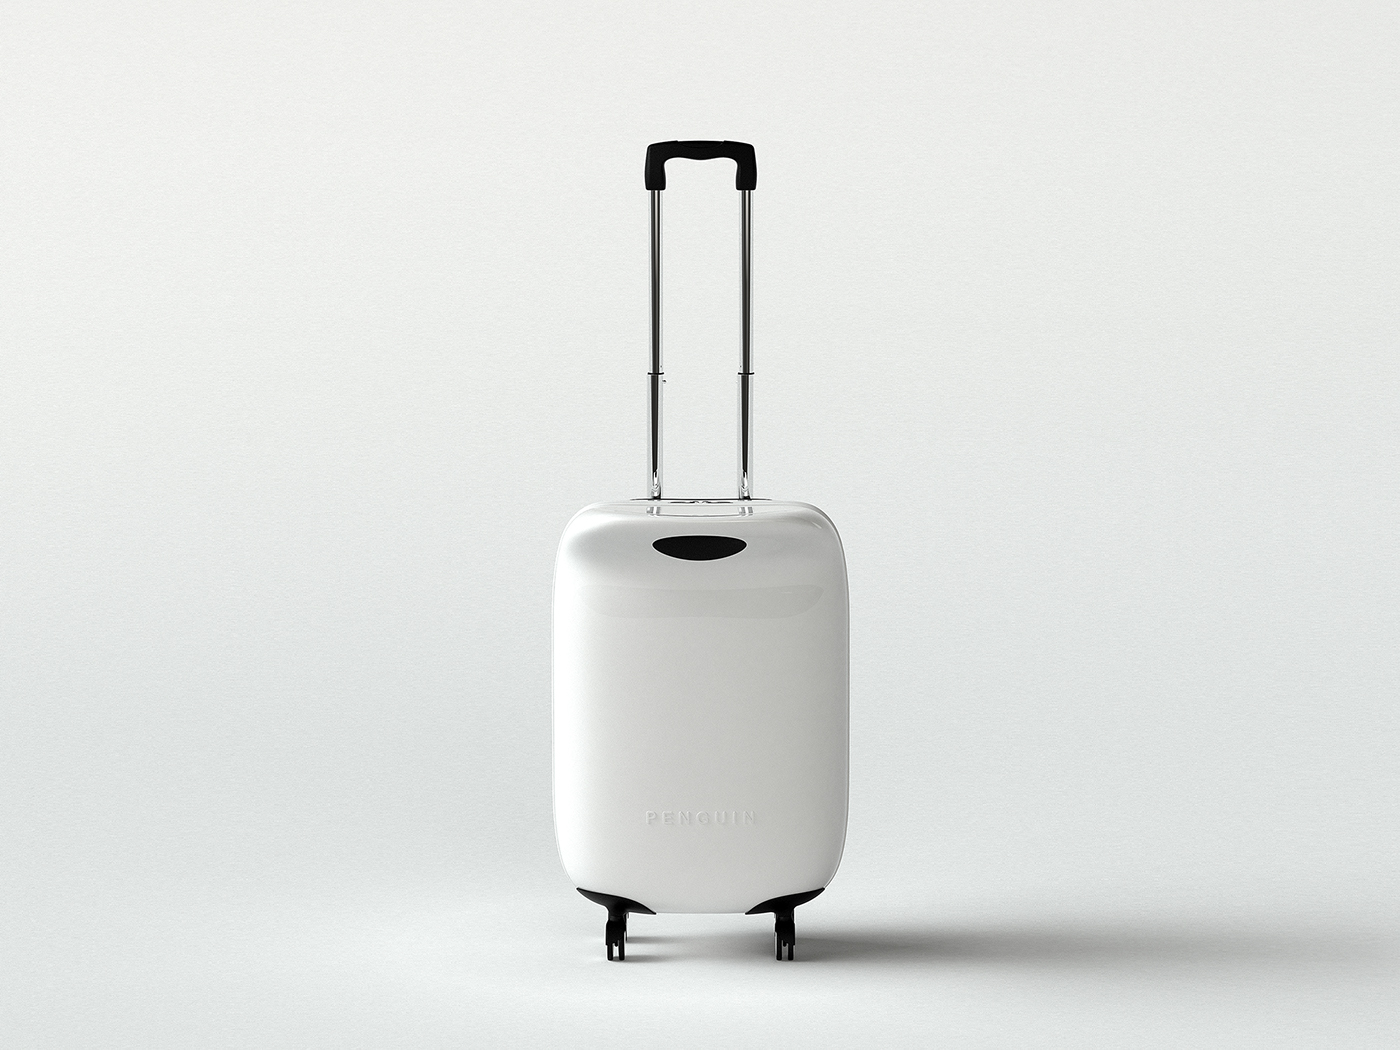 luggage bag design minimal simple living objet idea White interaction